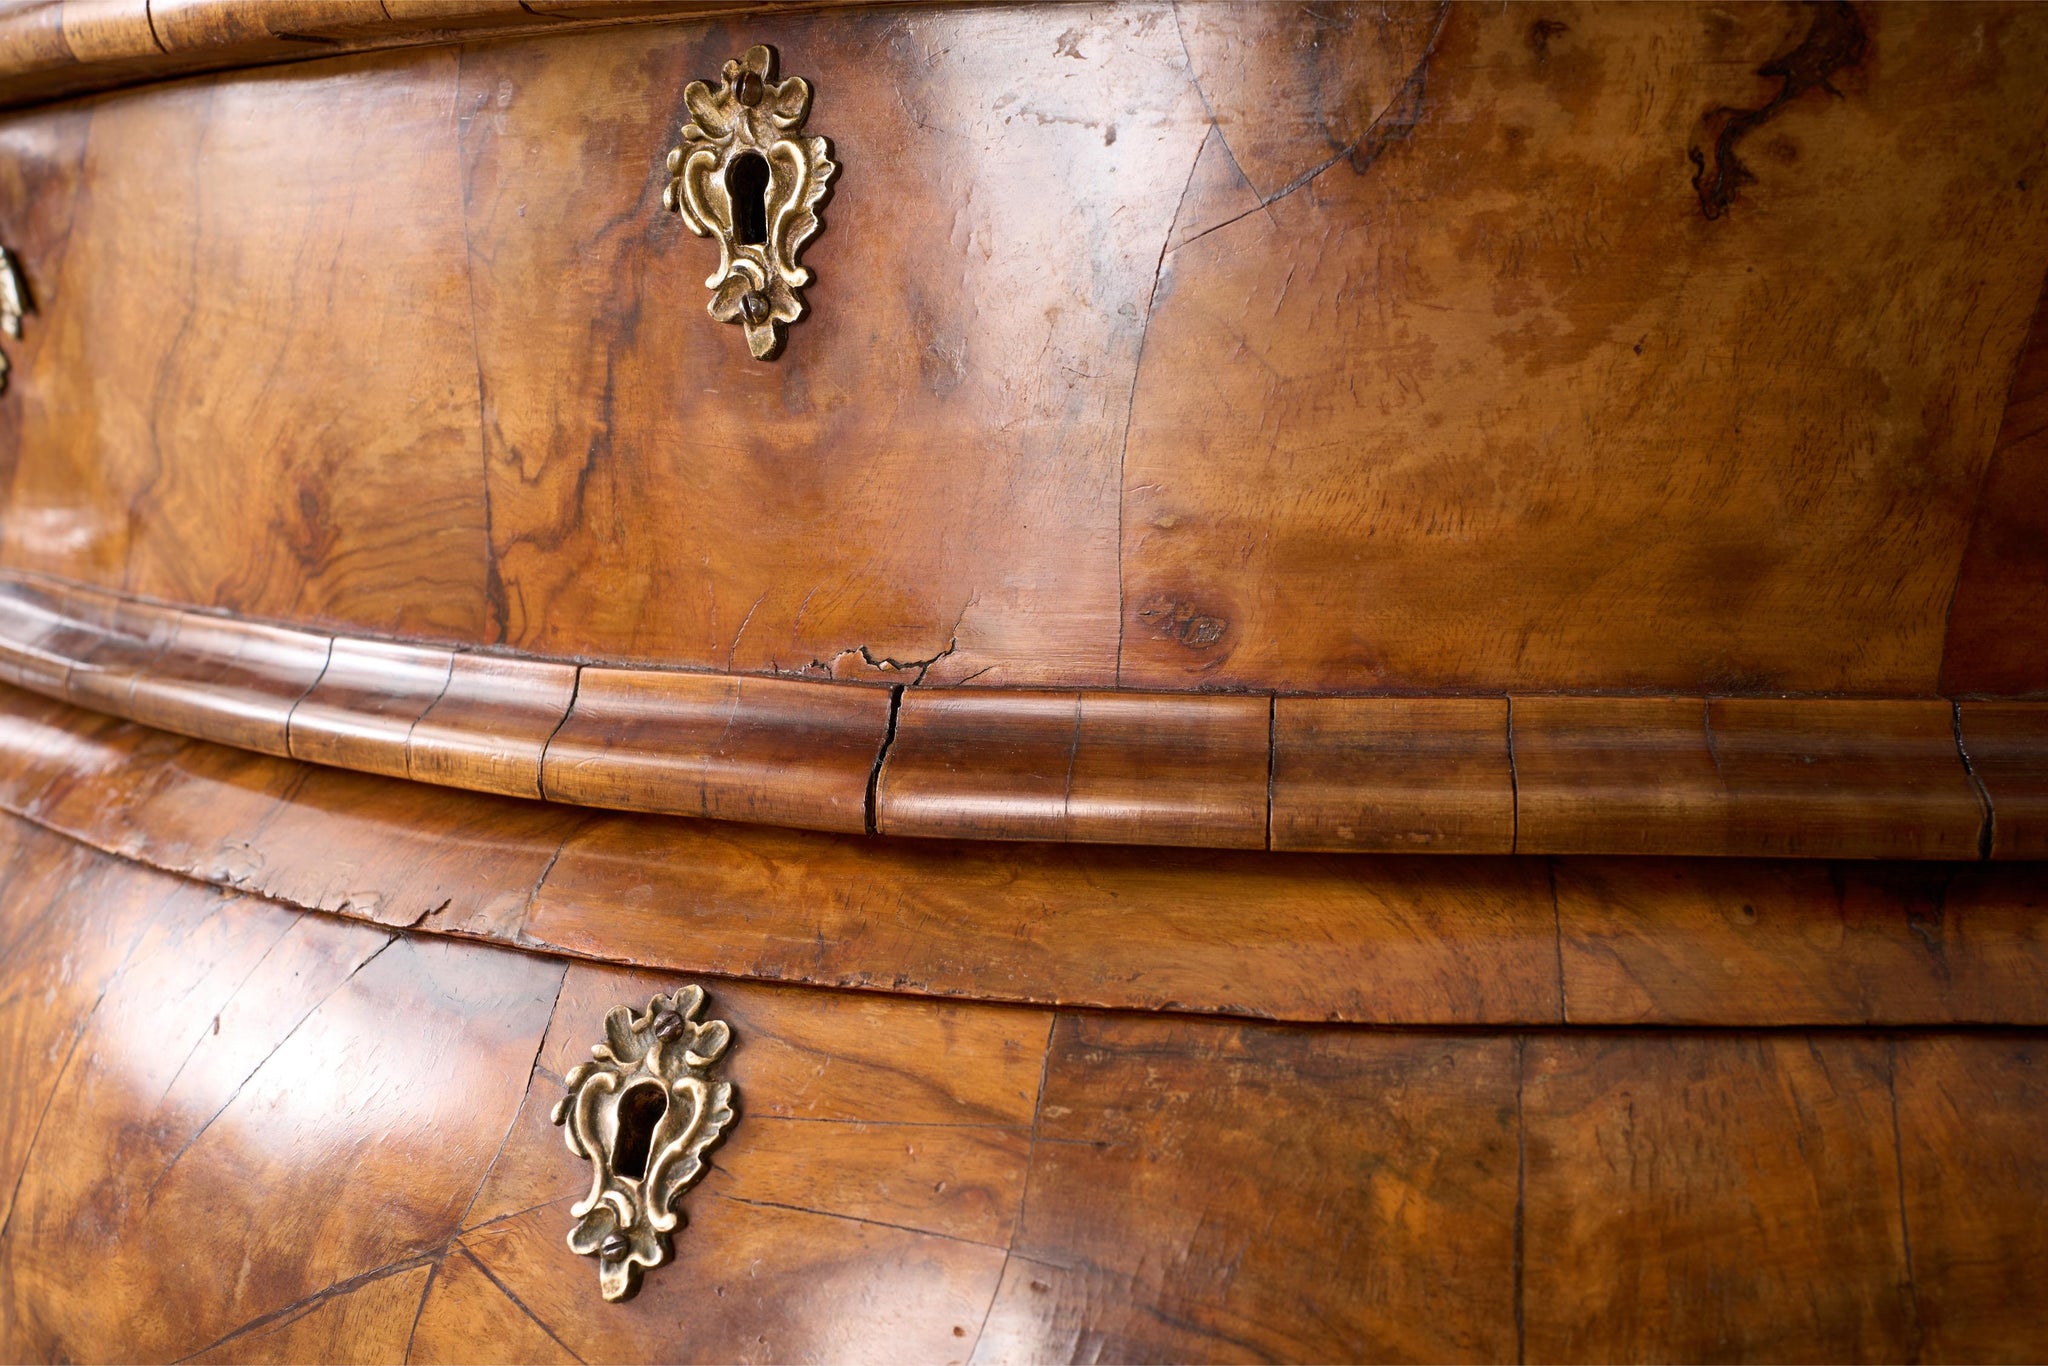 Early 20th century Italian Burr walnut chest of drawers